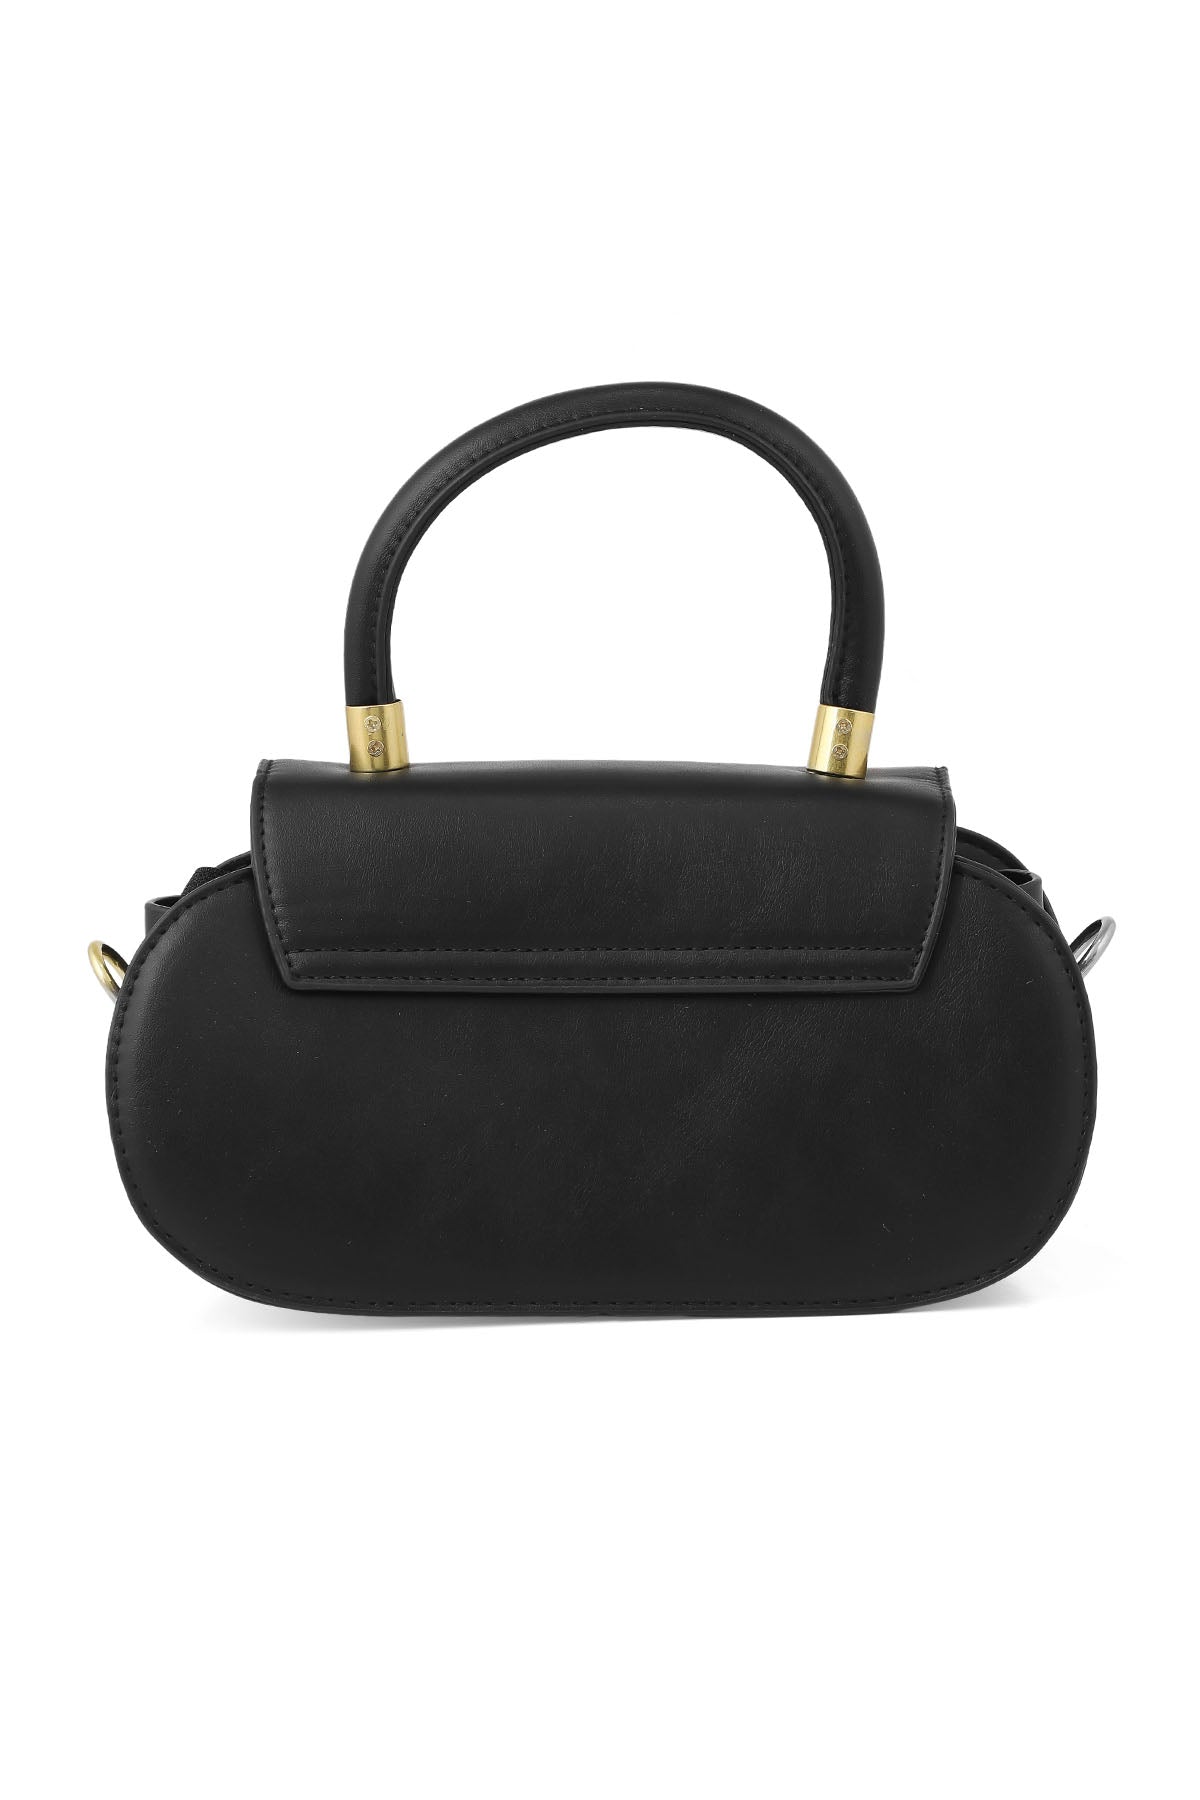 Top Handle Hand Bags B14959-Black